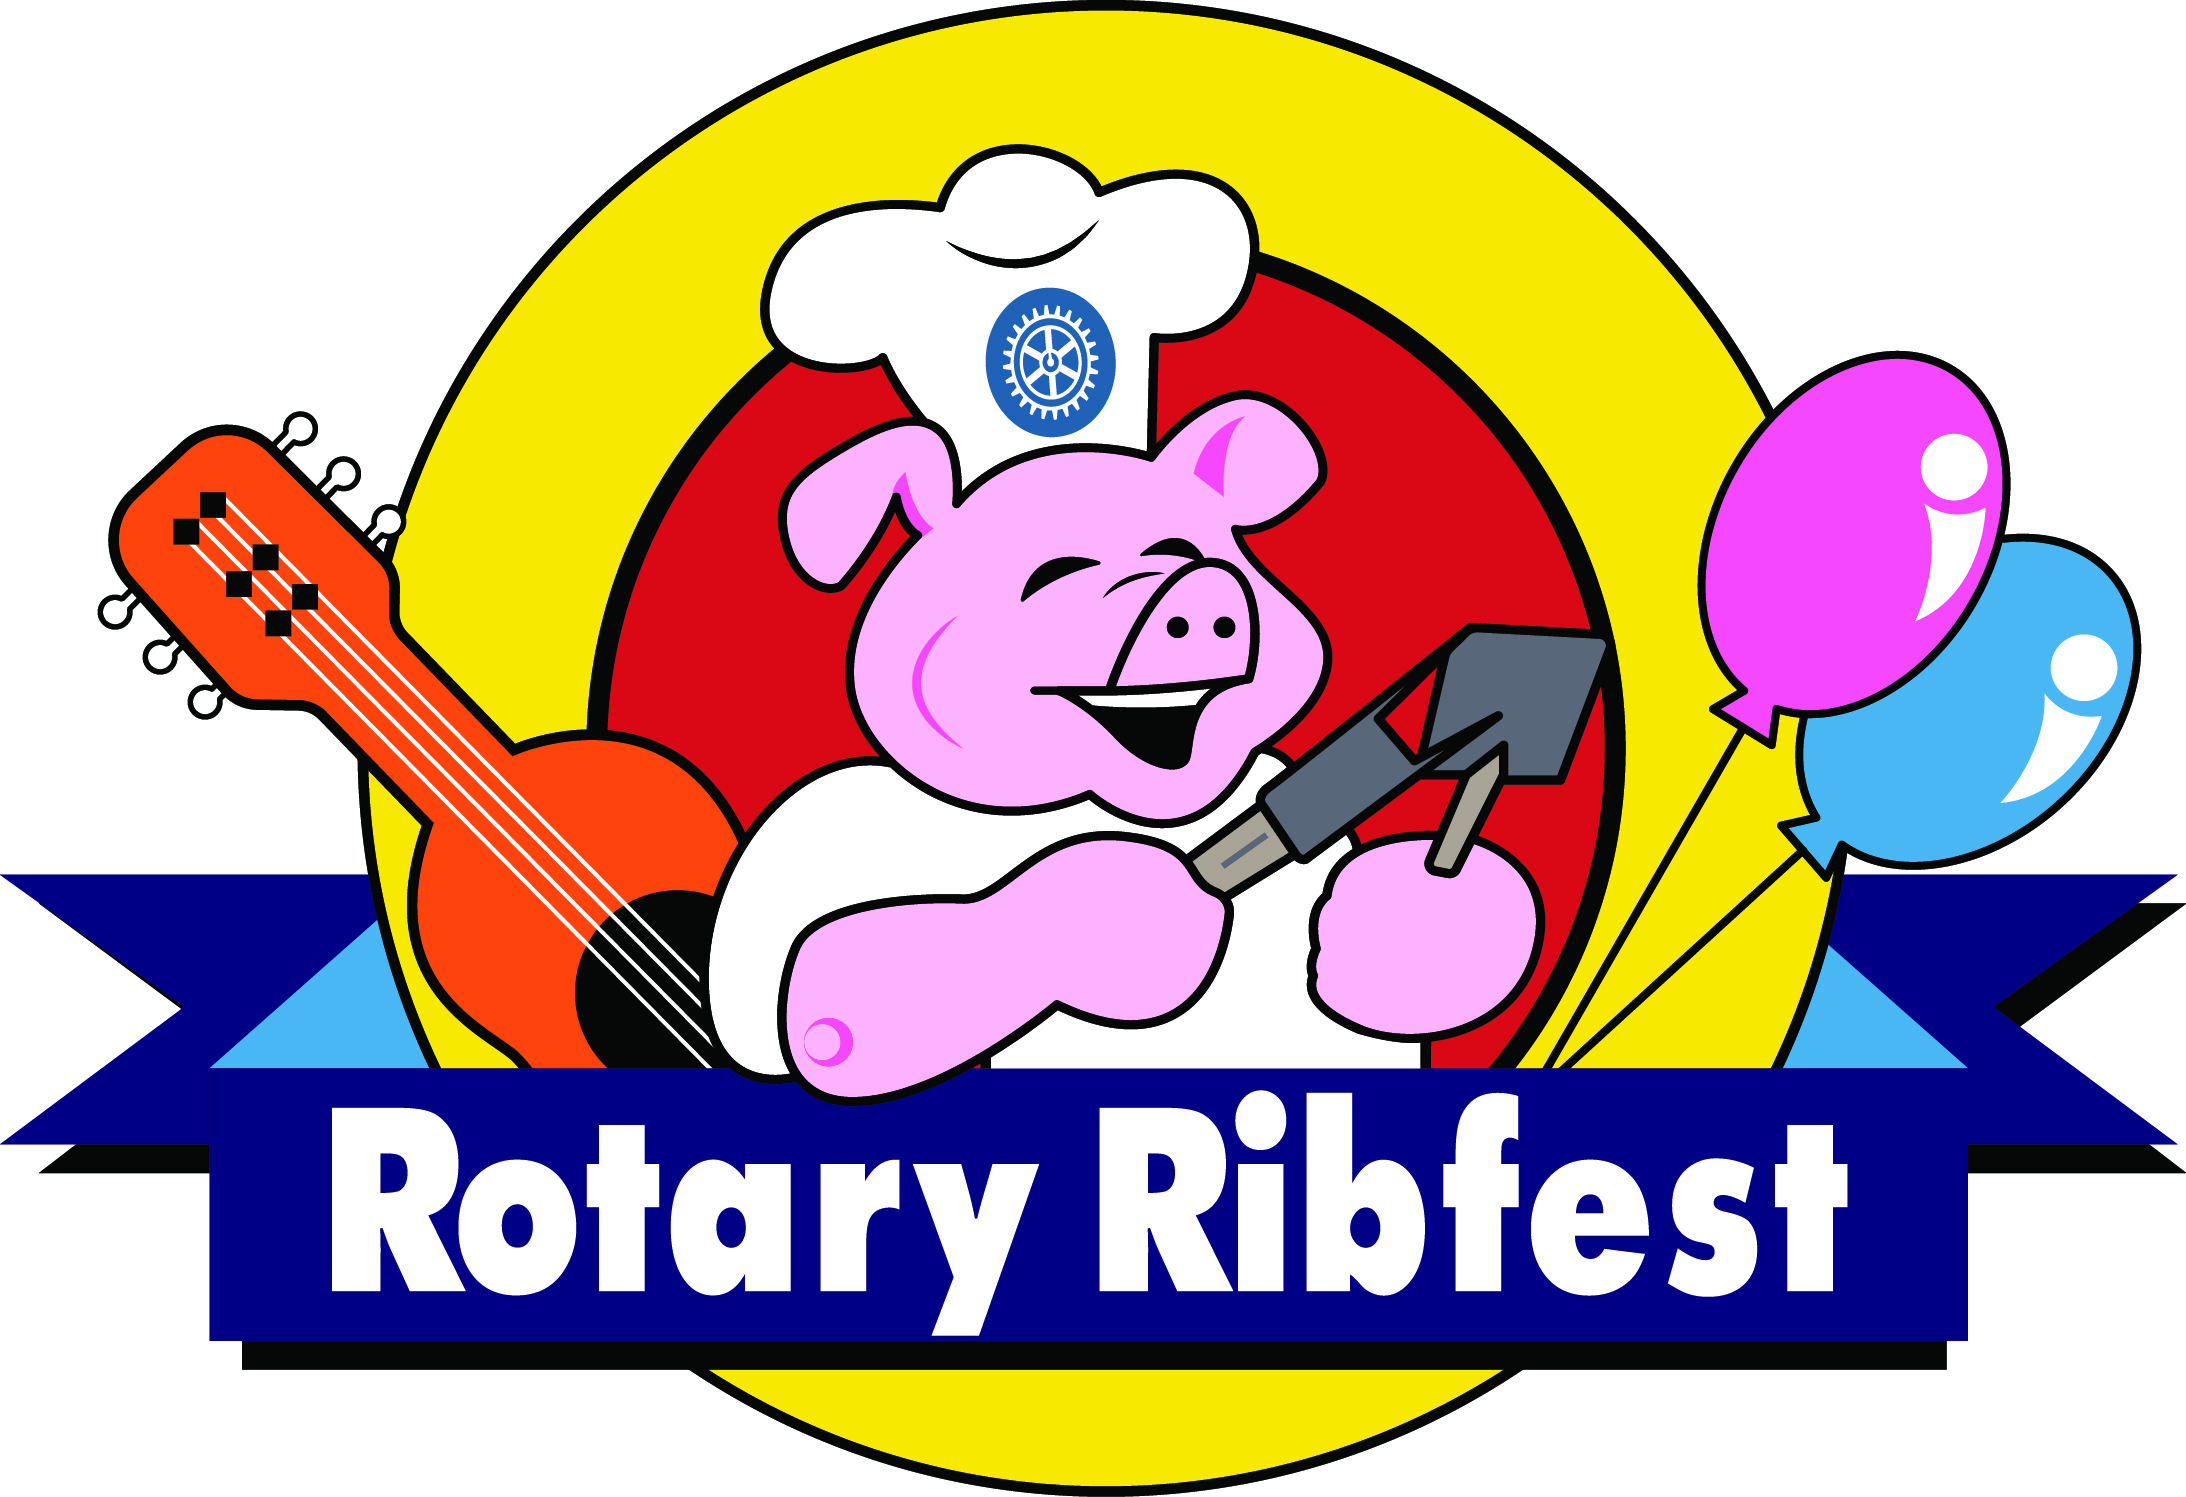 Kawartha Rotary Ribfest